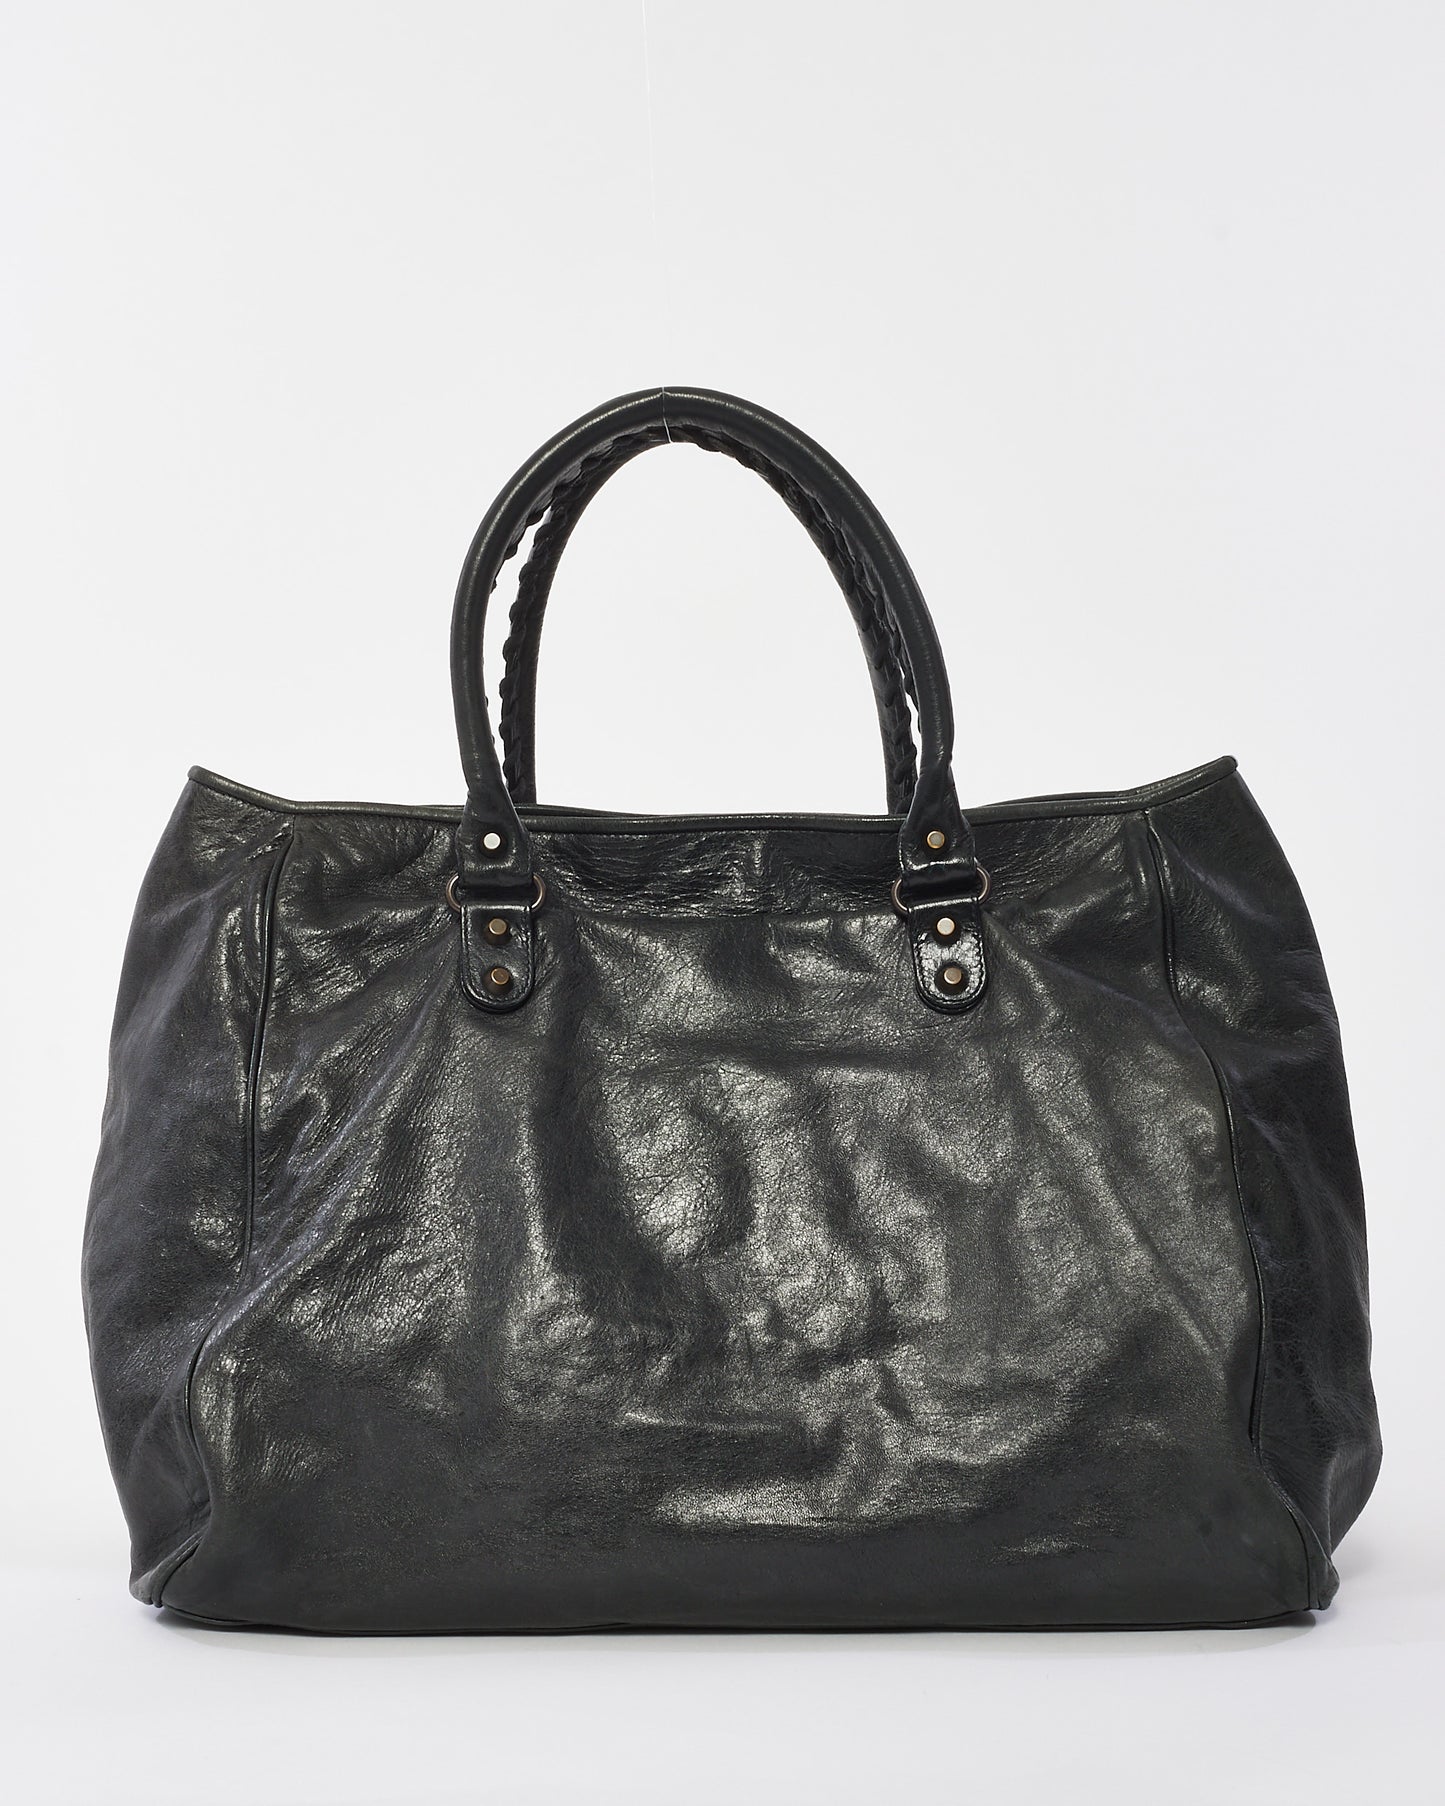 Balenciaga Black Leather Large Sunday Tote Bag